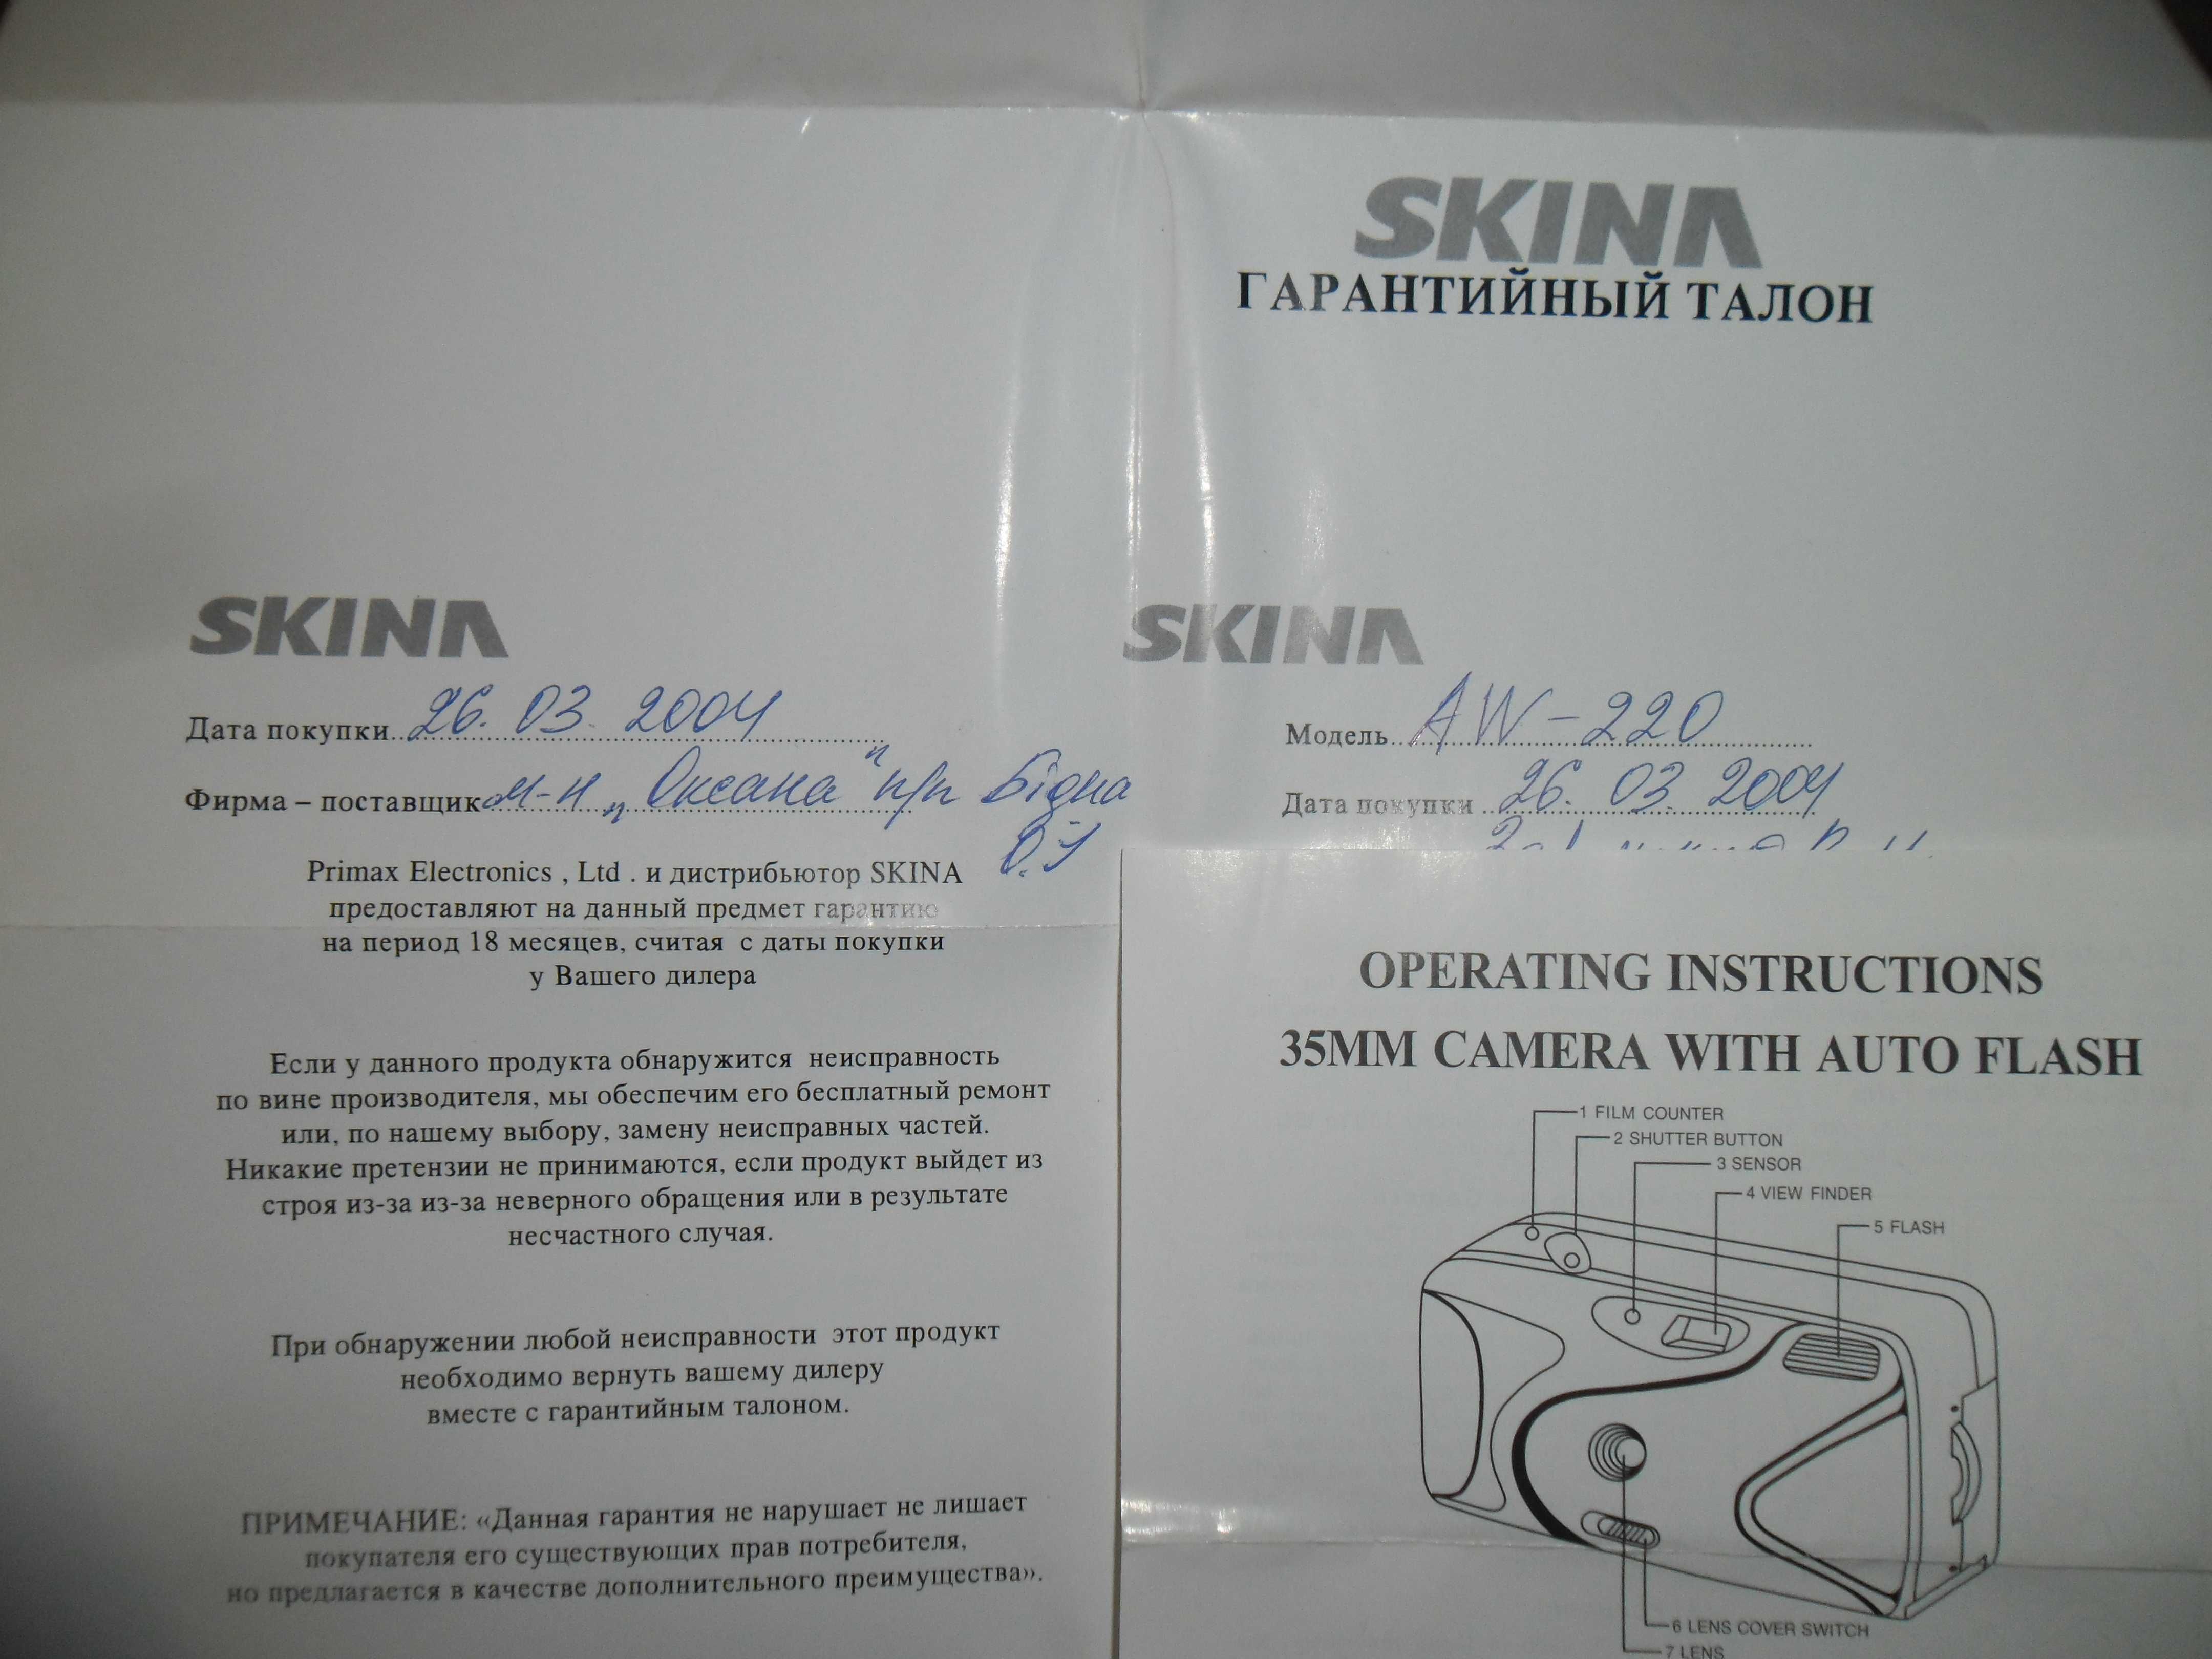 Пленочний фотоапарат  SKINA  AW - 220.